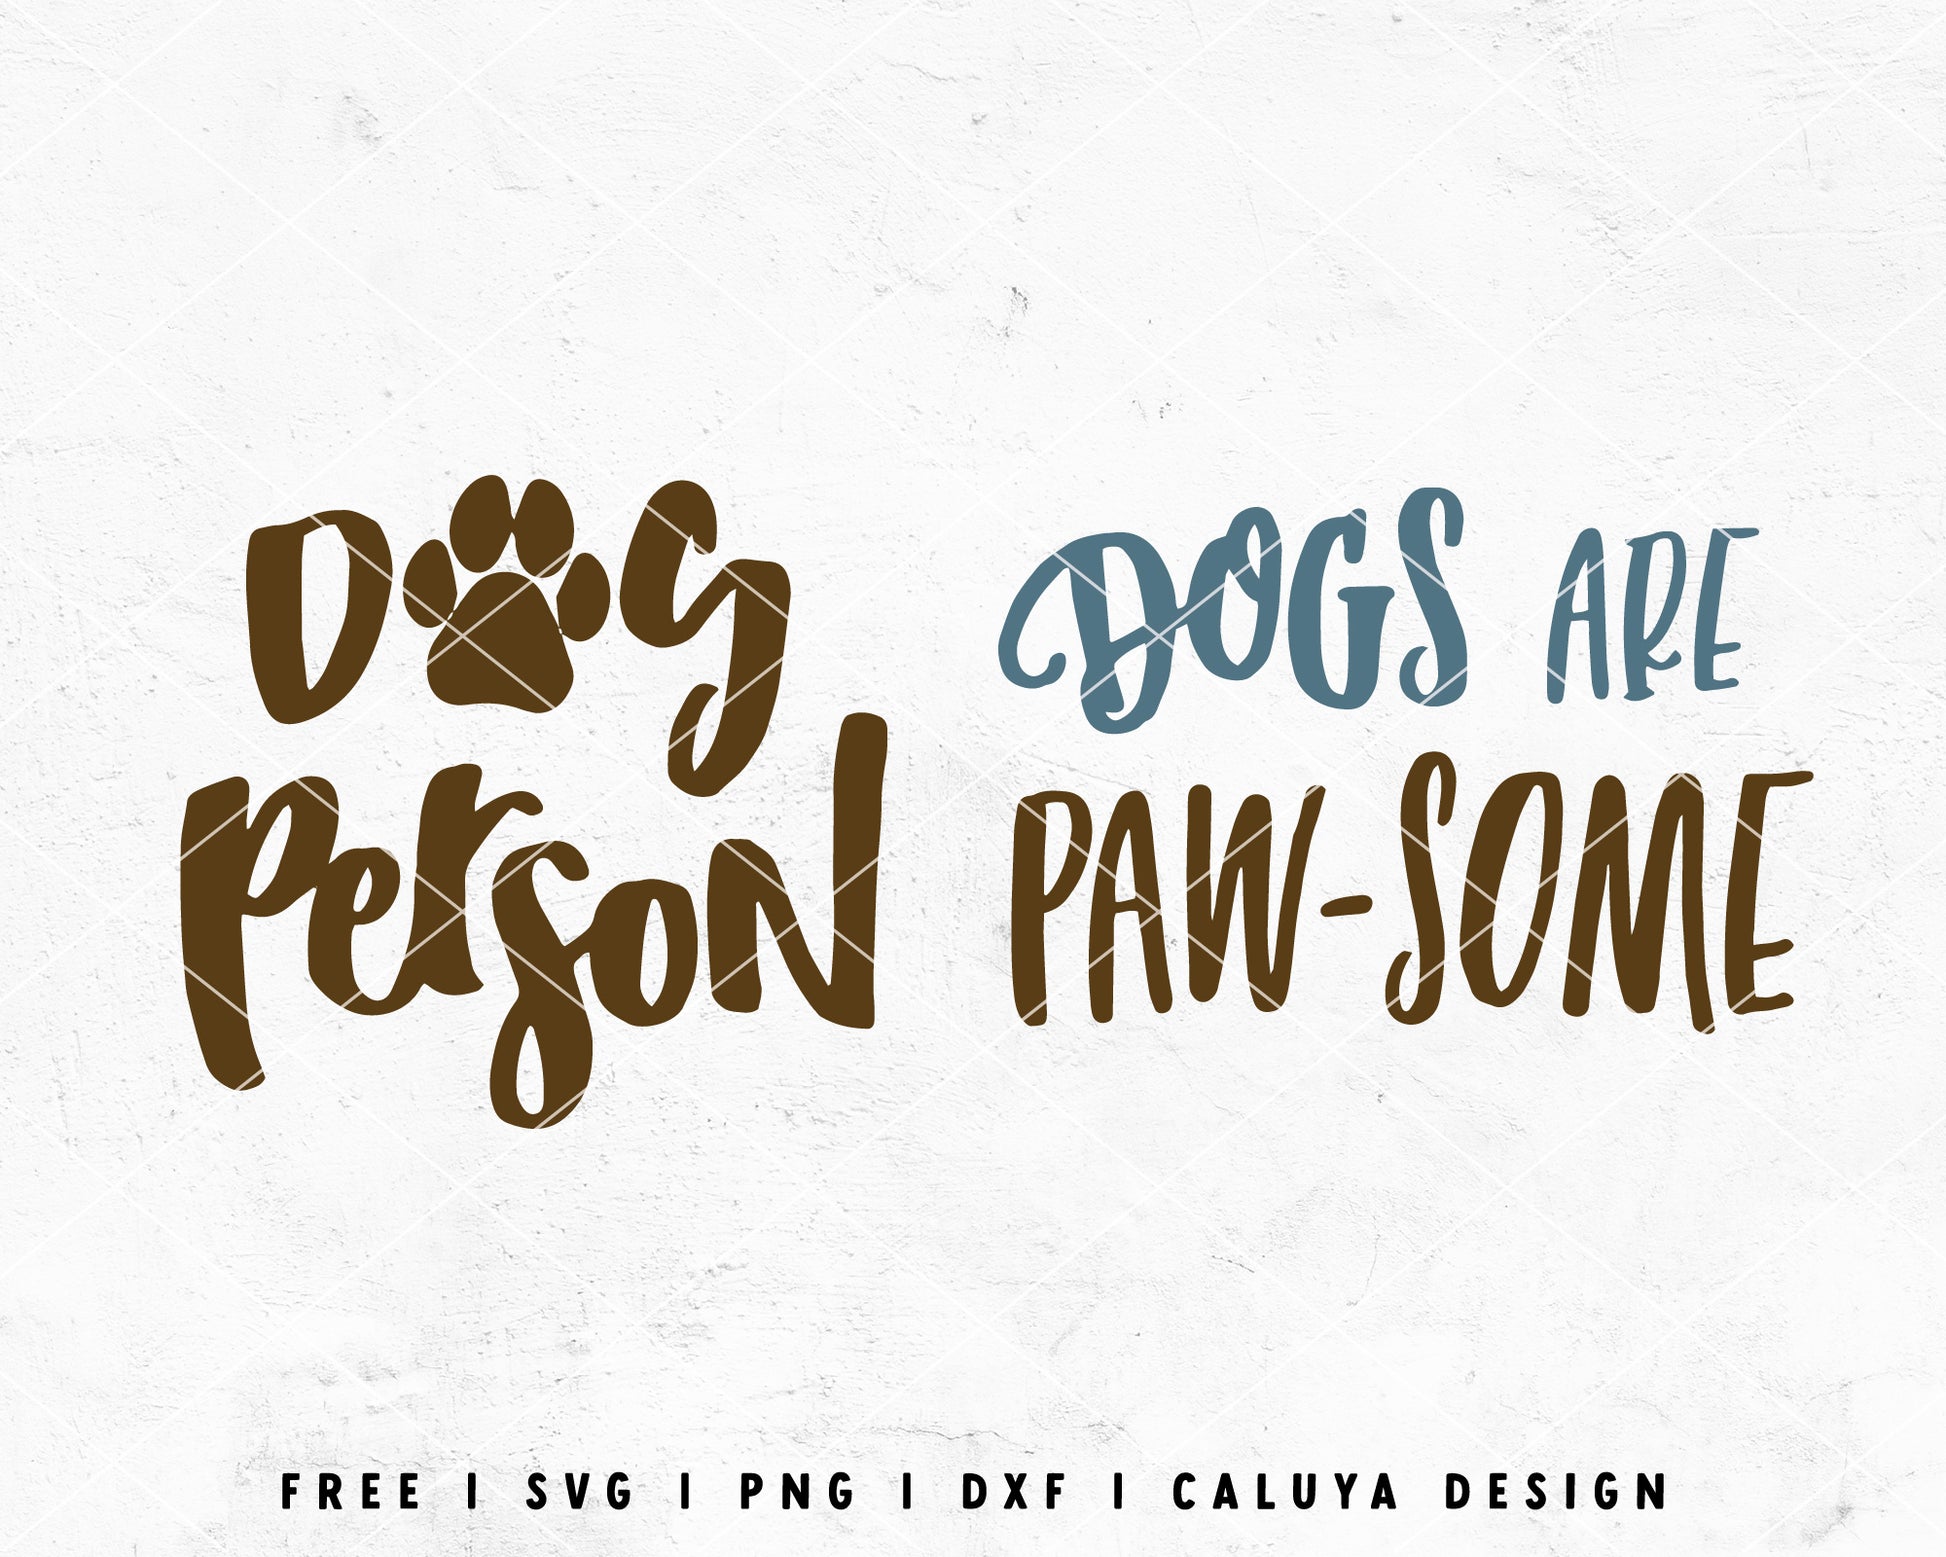 SVG > dog puppy - Free SVG Image & Icon.